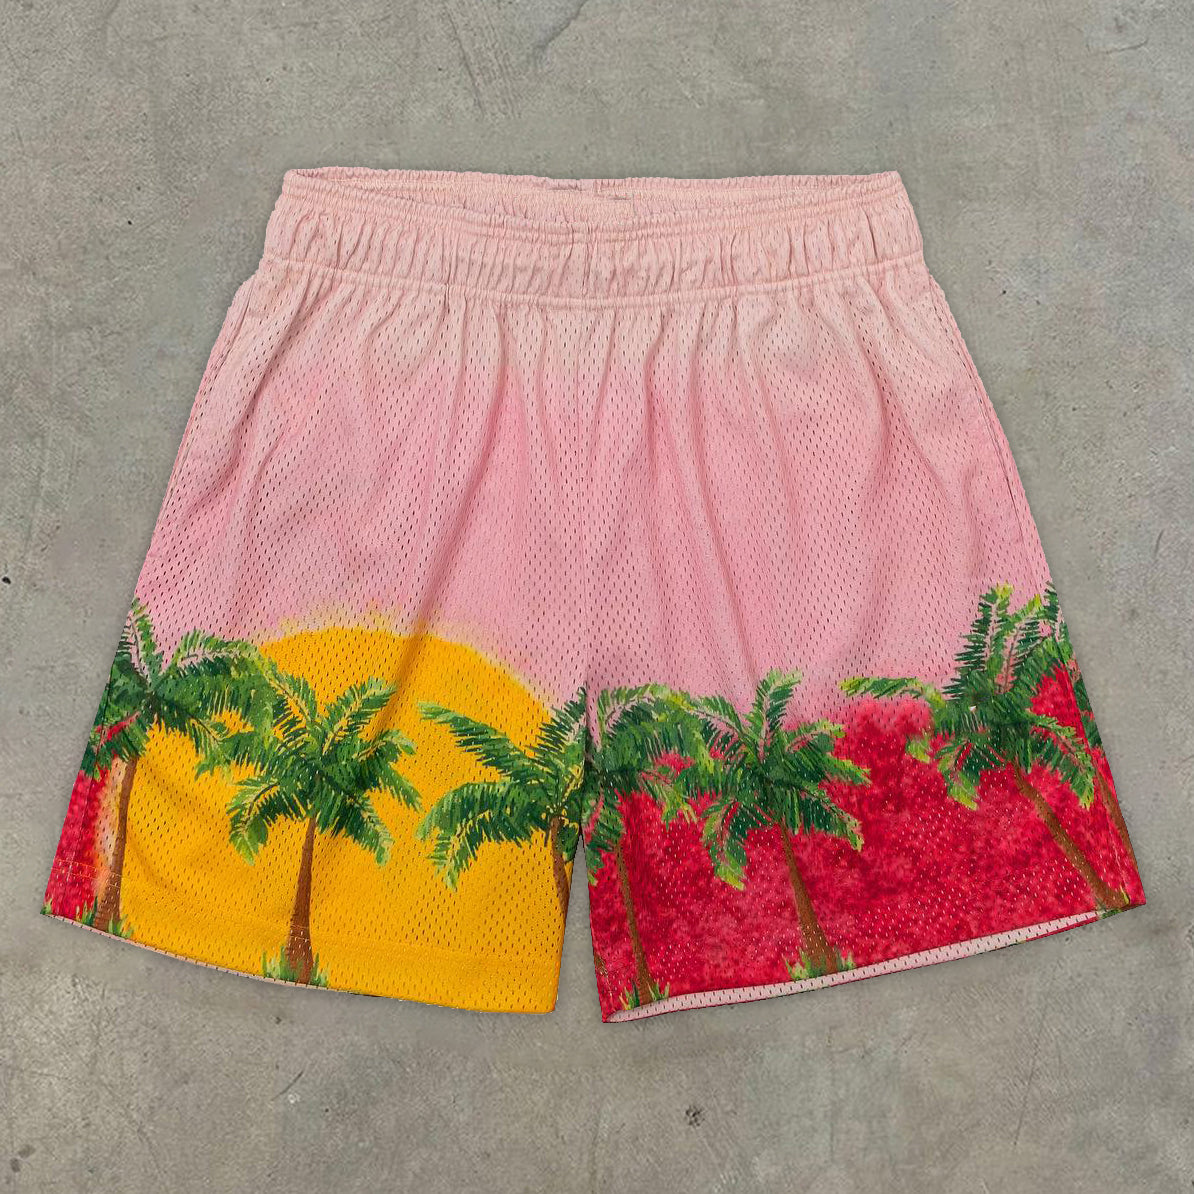 Leisure vacation beach sports mesh shorts